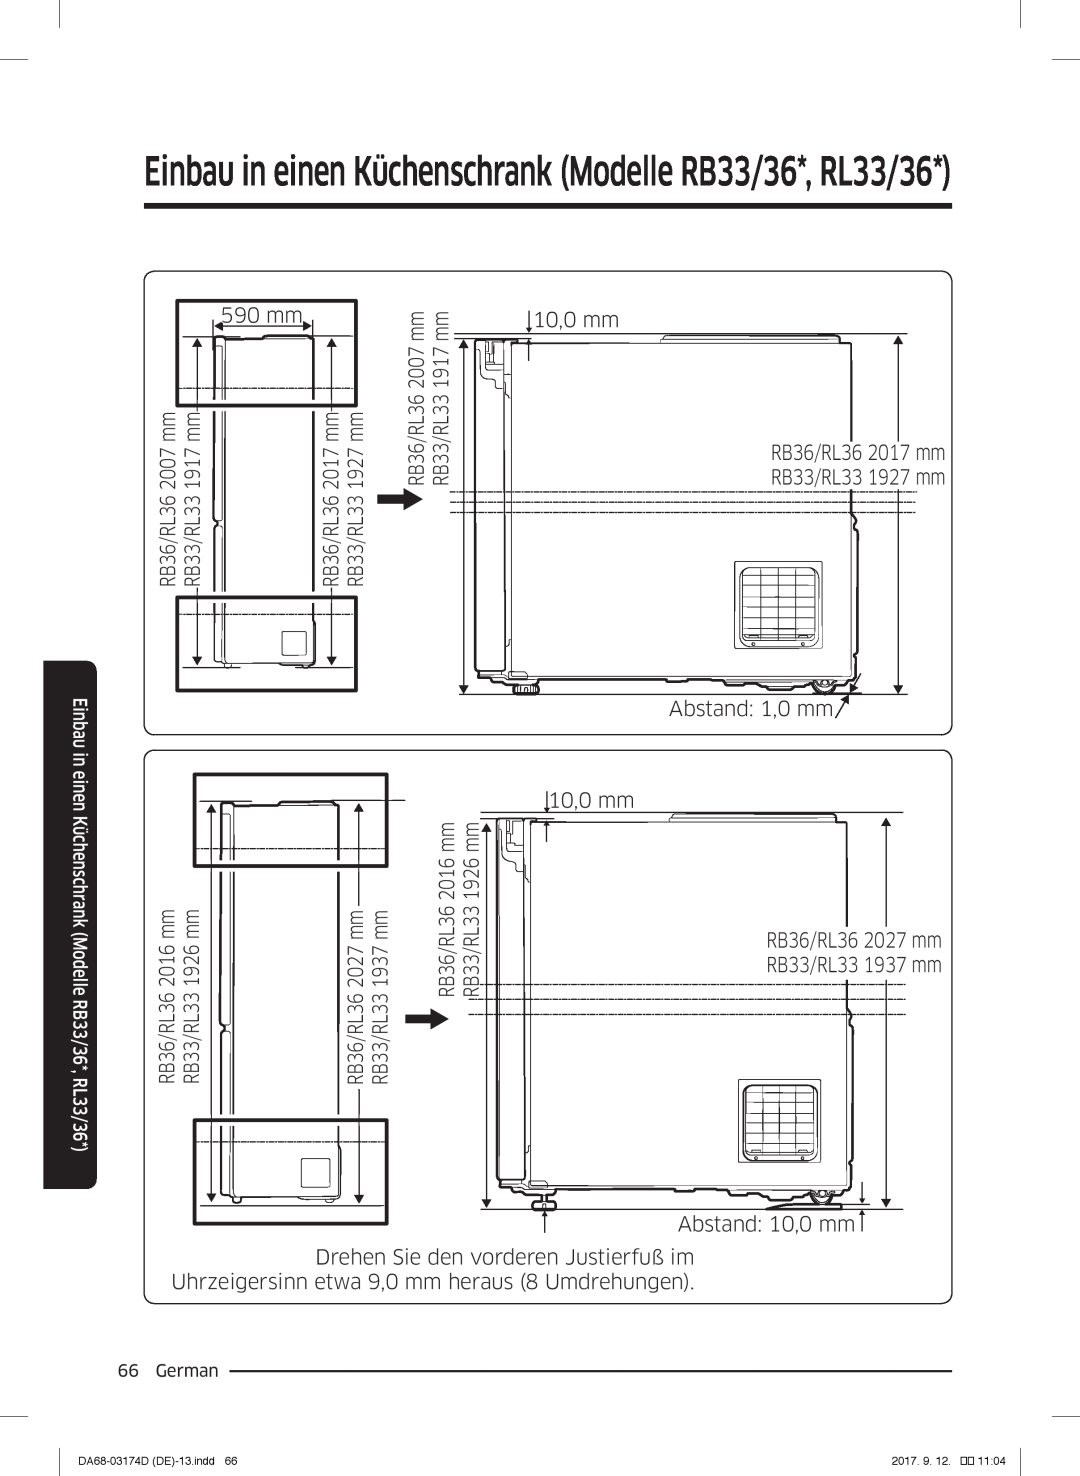 Samsung RL41J7799S4/EG, RL41J7799B1/EG manual Einbau in einen Küchenschrank Modelle RB33/36*, RL33/36, RB33/RL33 1917 mm 